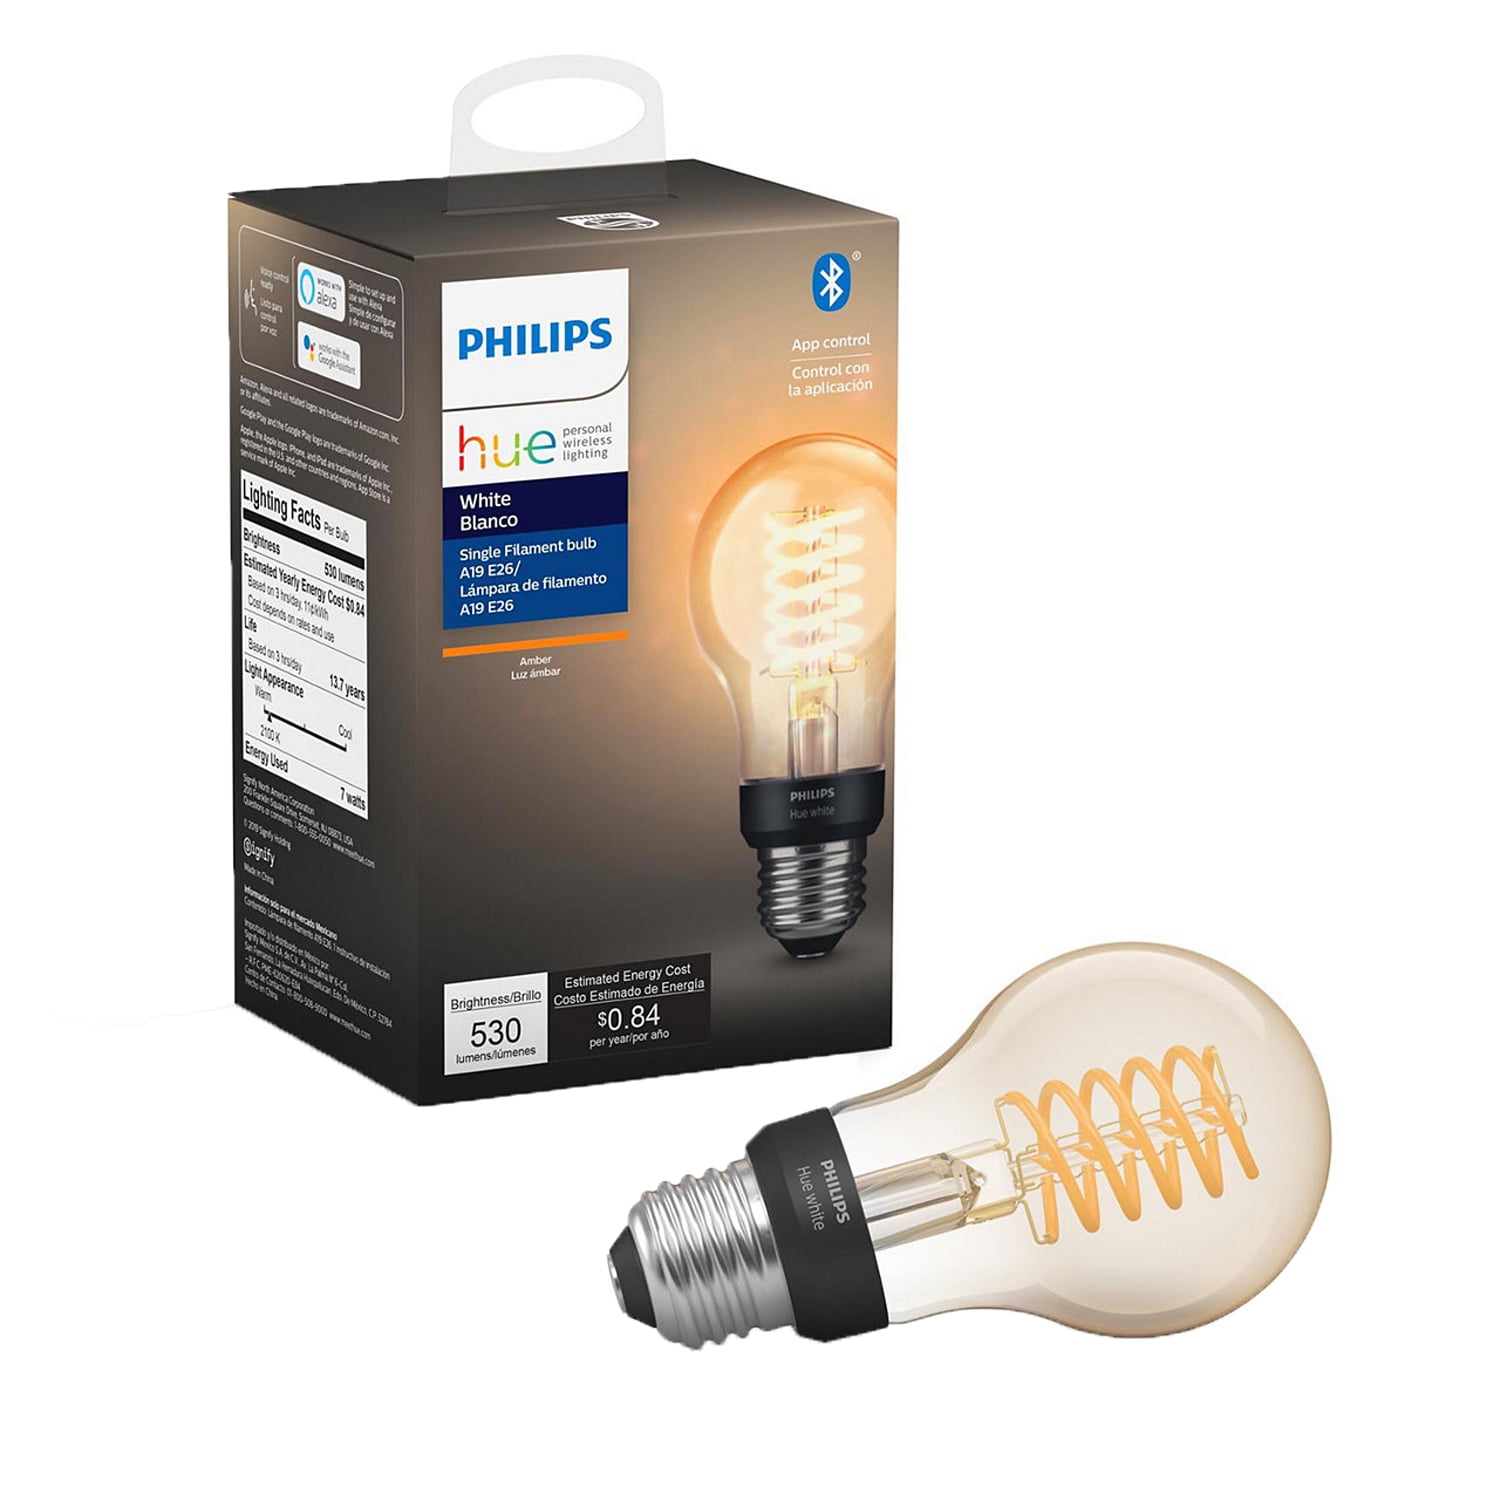 Philips Hue White Wireless Dimming Kit A60 E27 Edison LED Bulb A19 WiFi 240V 